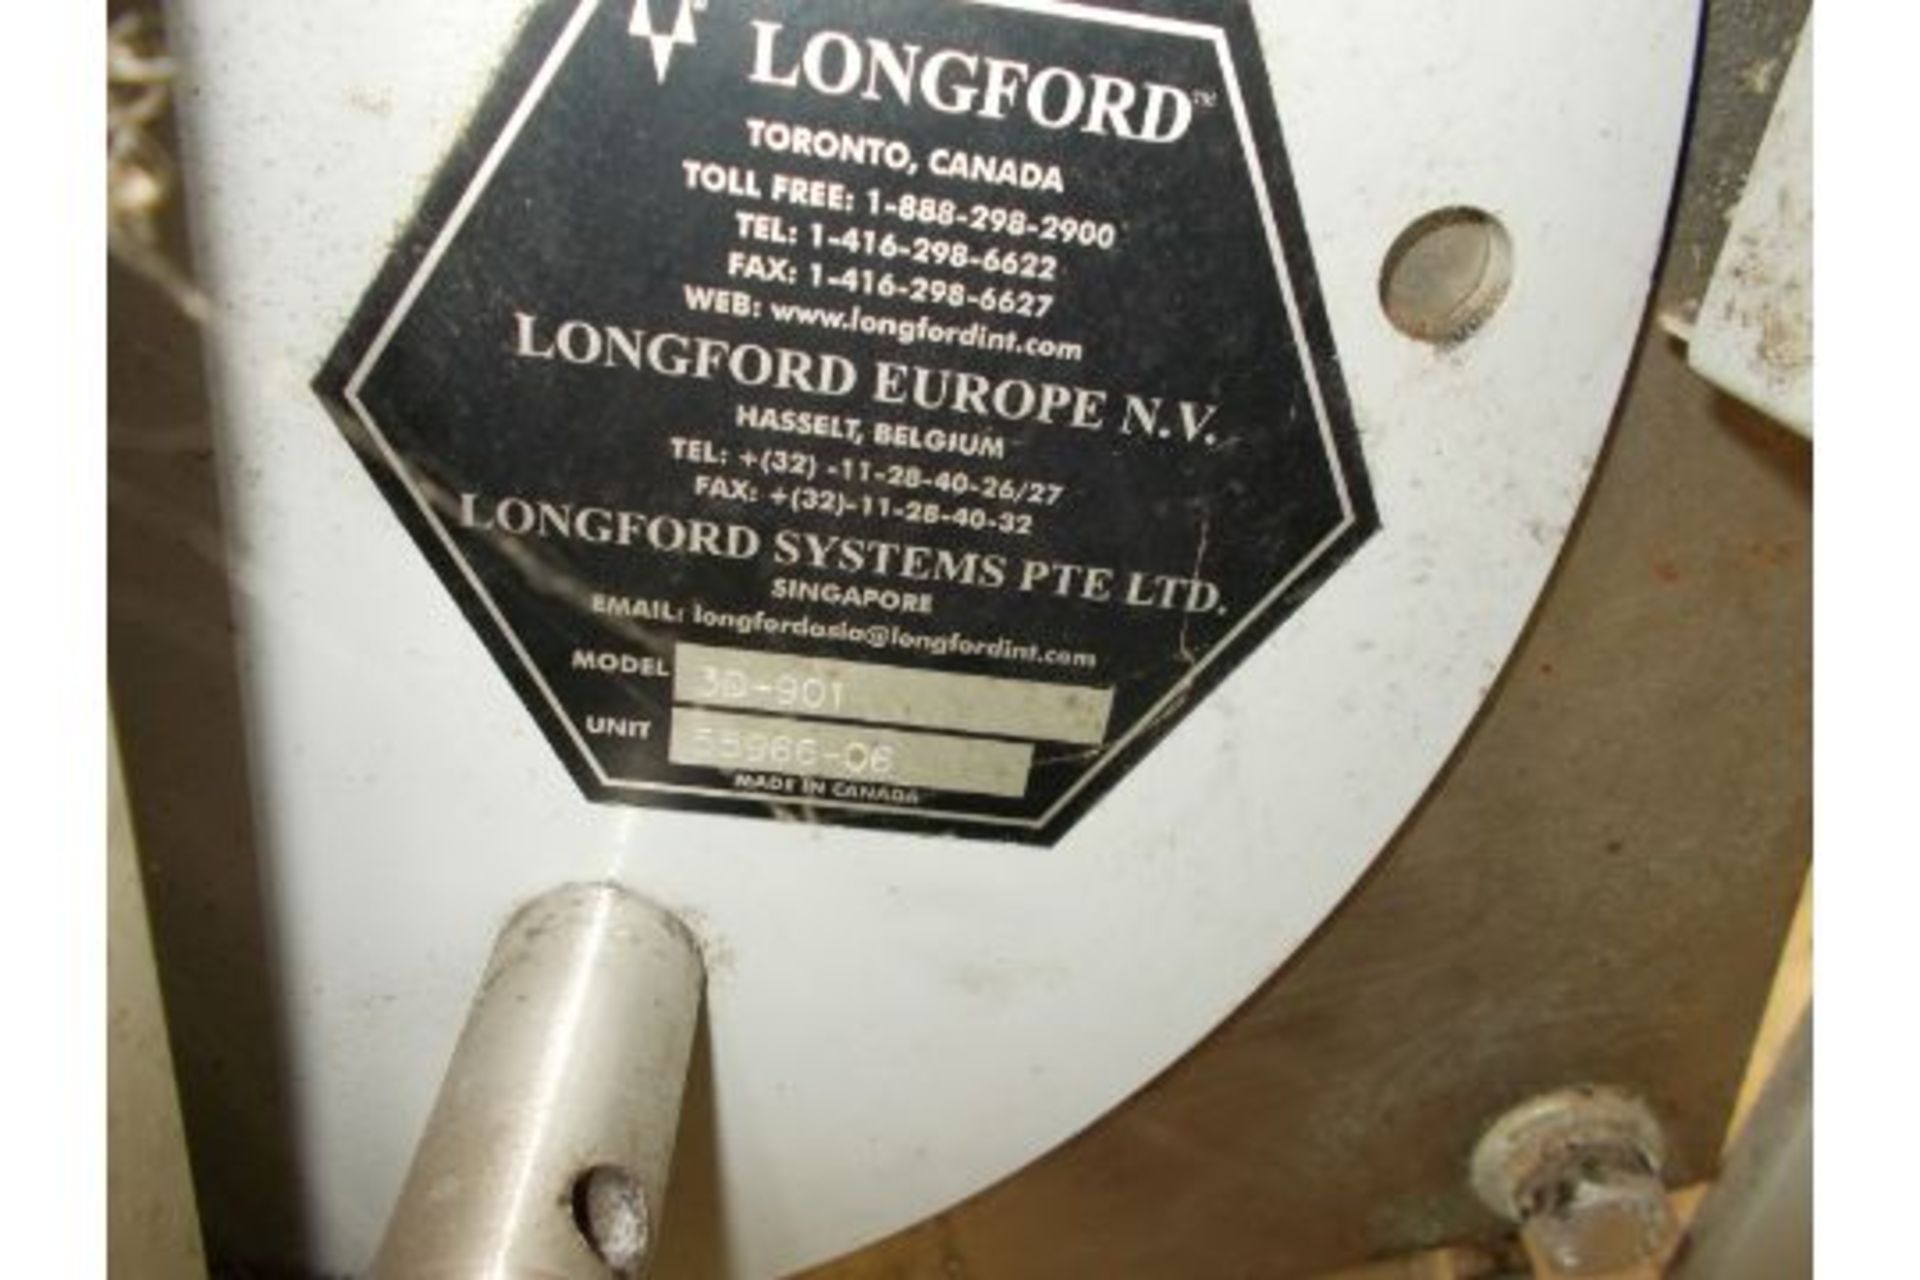 Longford ' 3D-901' feeder - Image 5 of 6